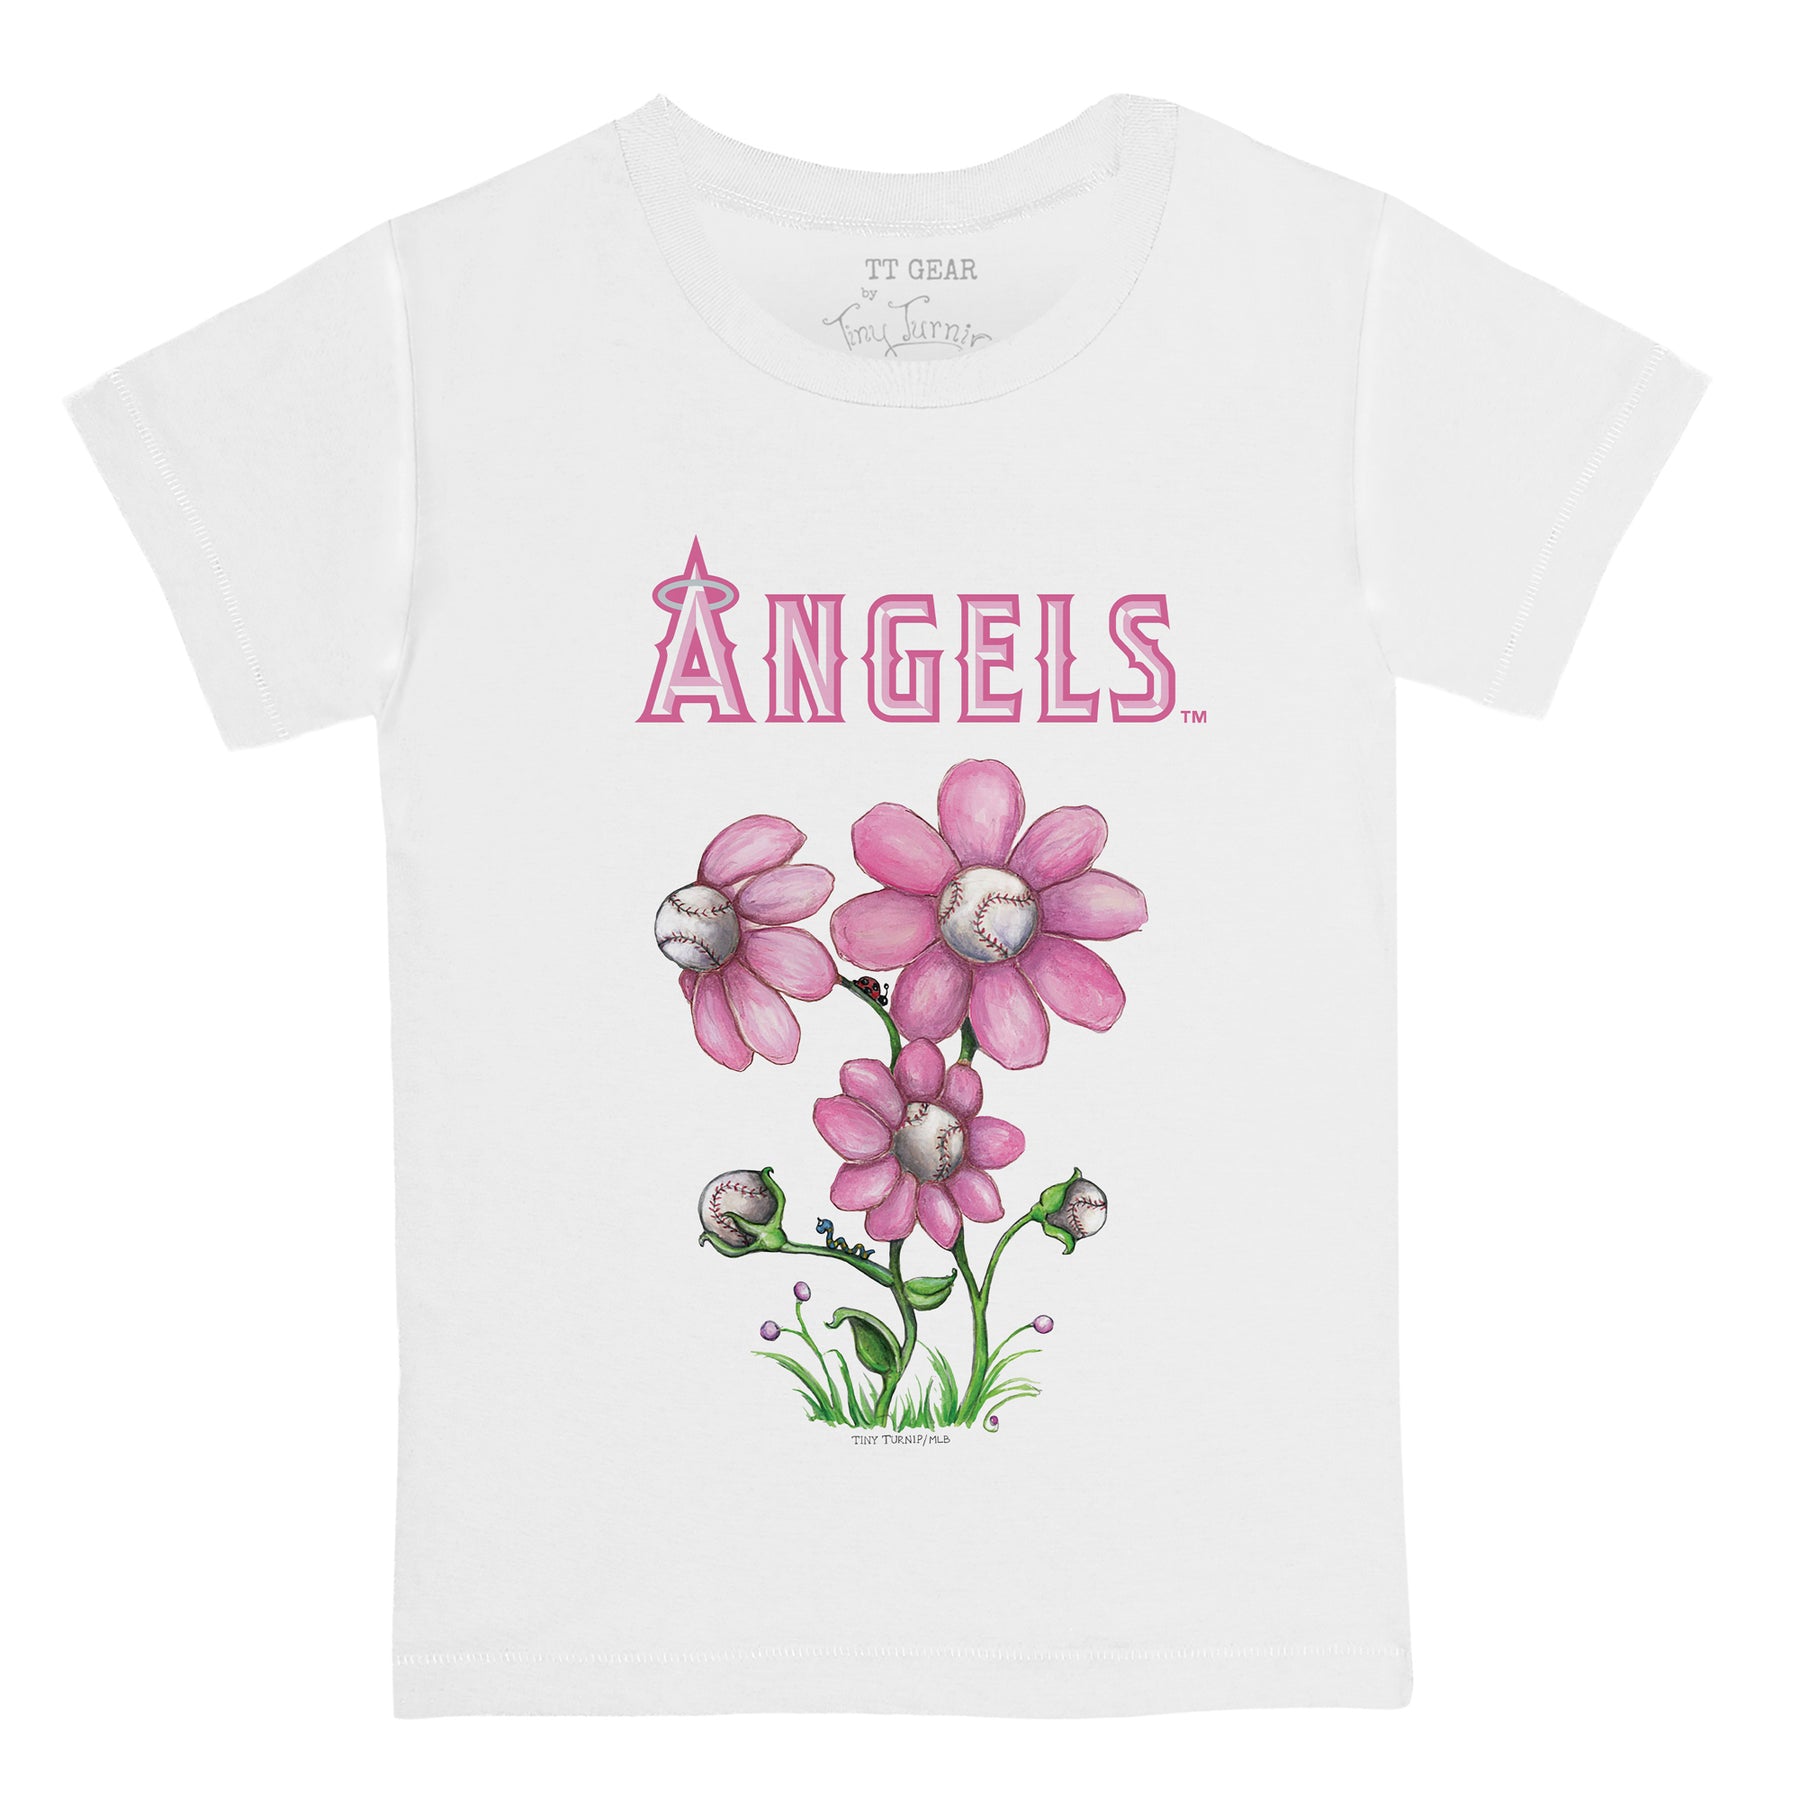 Los Angeles Angels Blooming Baseballs Tee Shirt